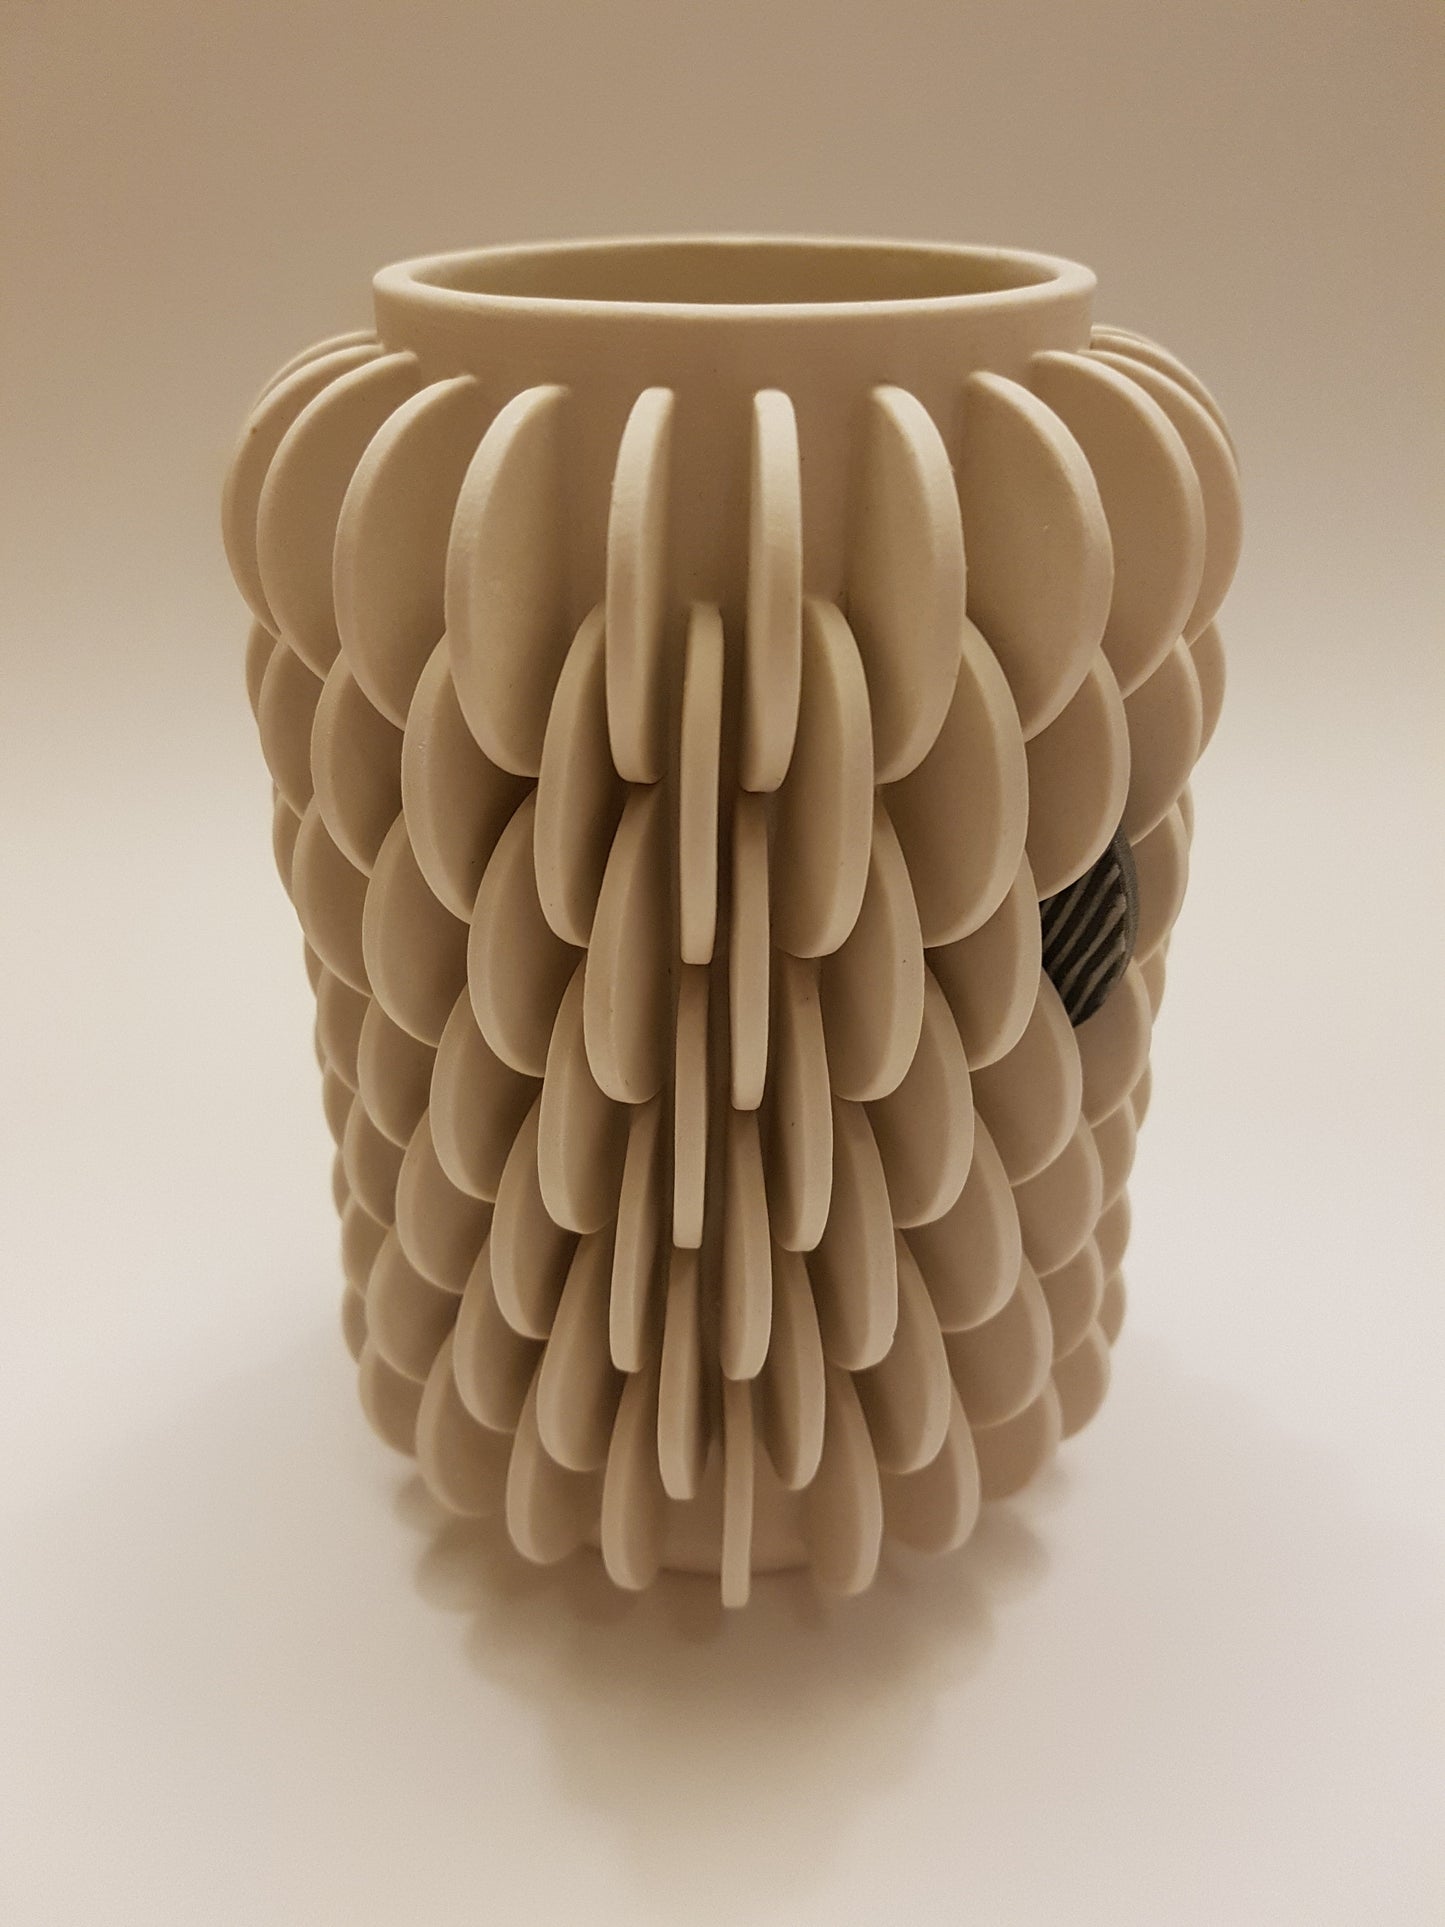 Vase with Single Patterned Disk